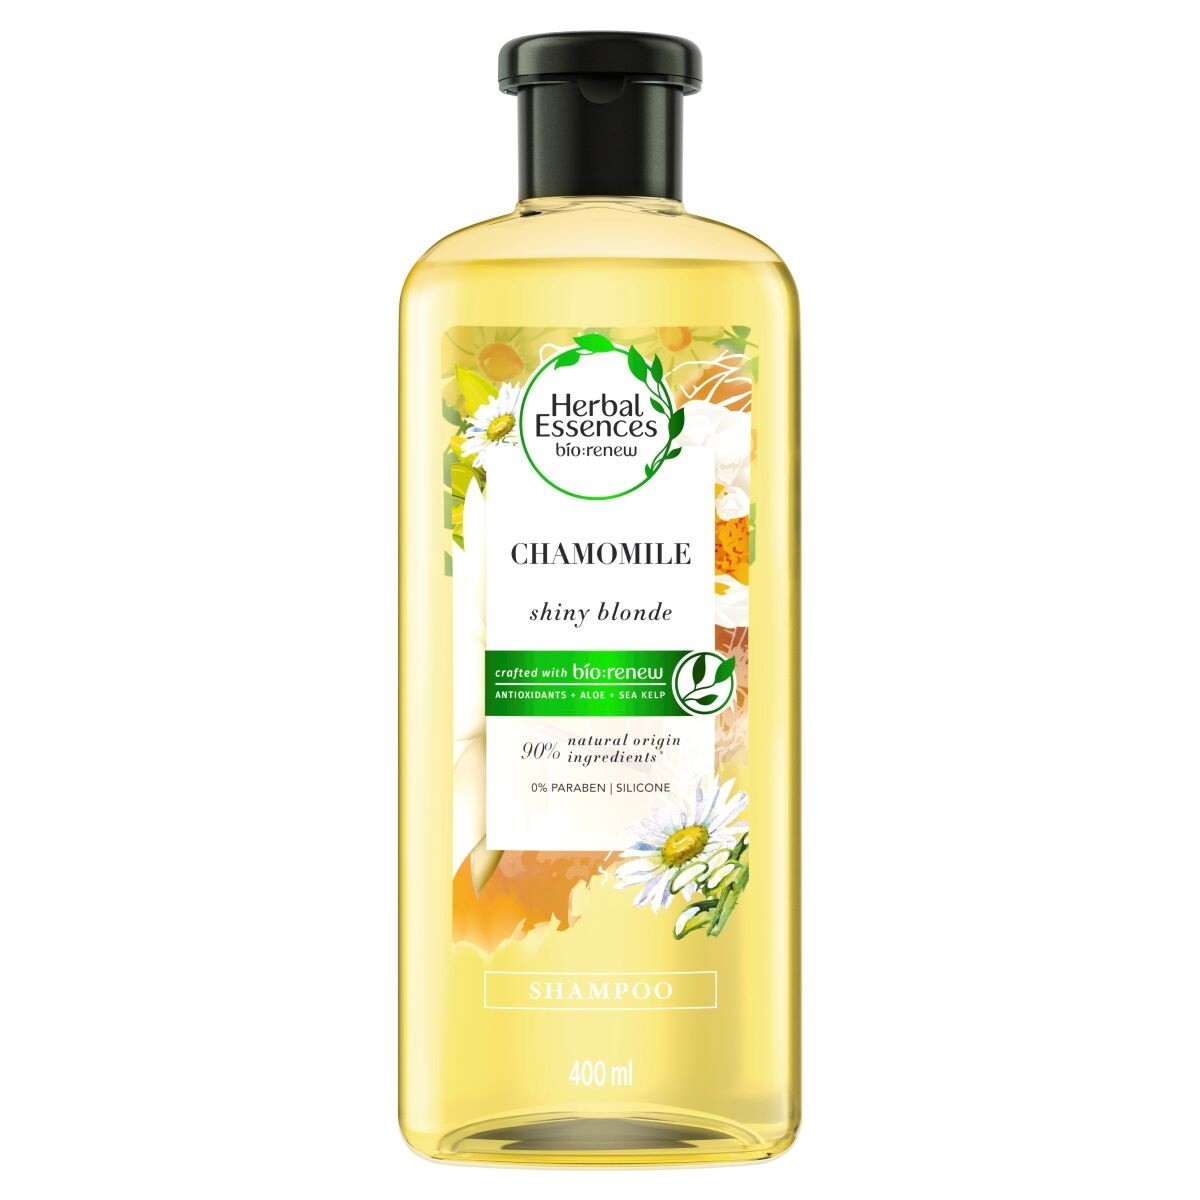 Shampoo Herbal Essences Chamomile 400 Ml. 